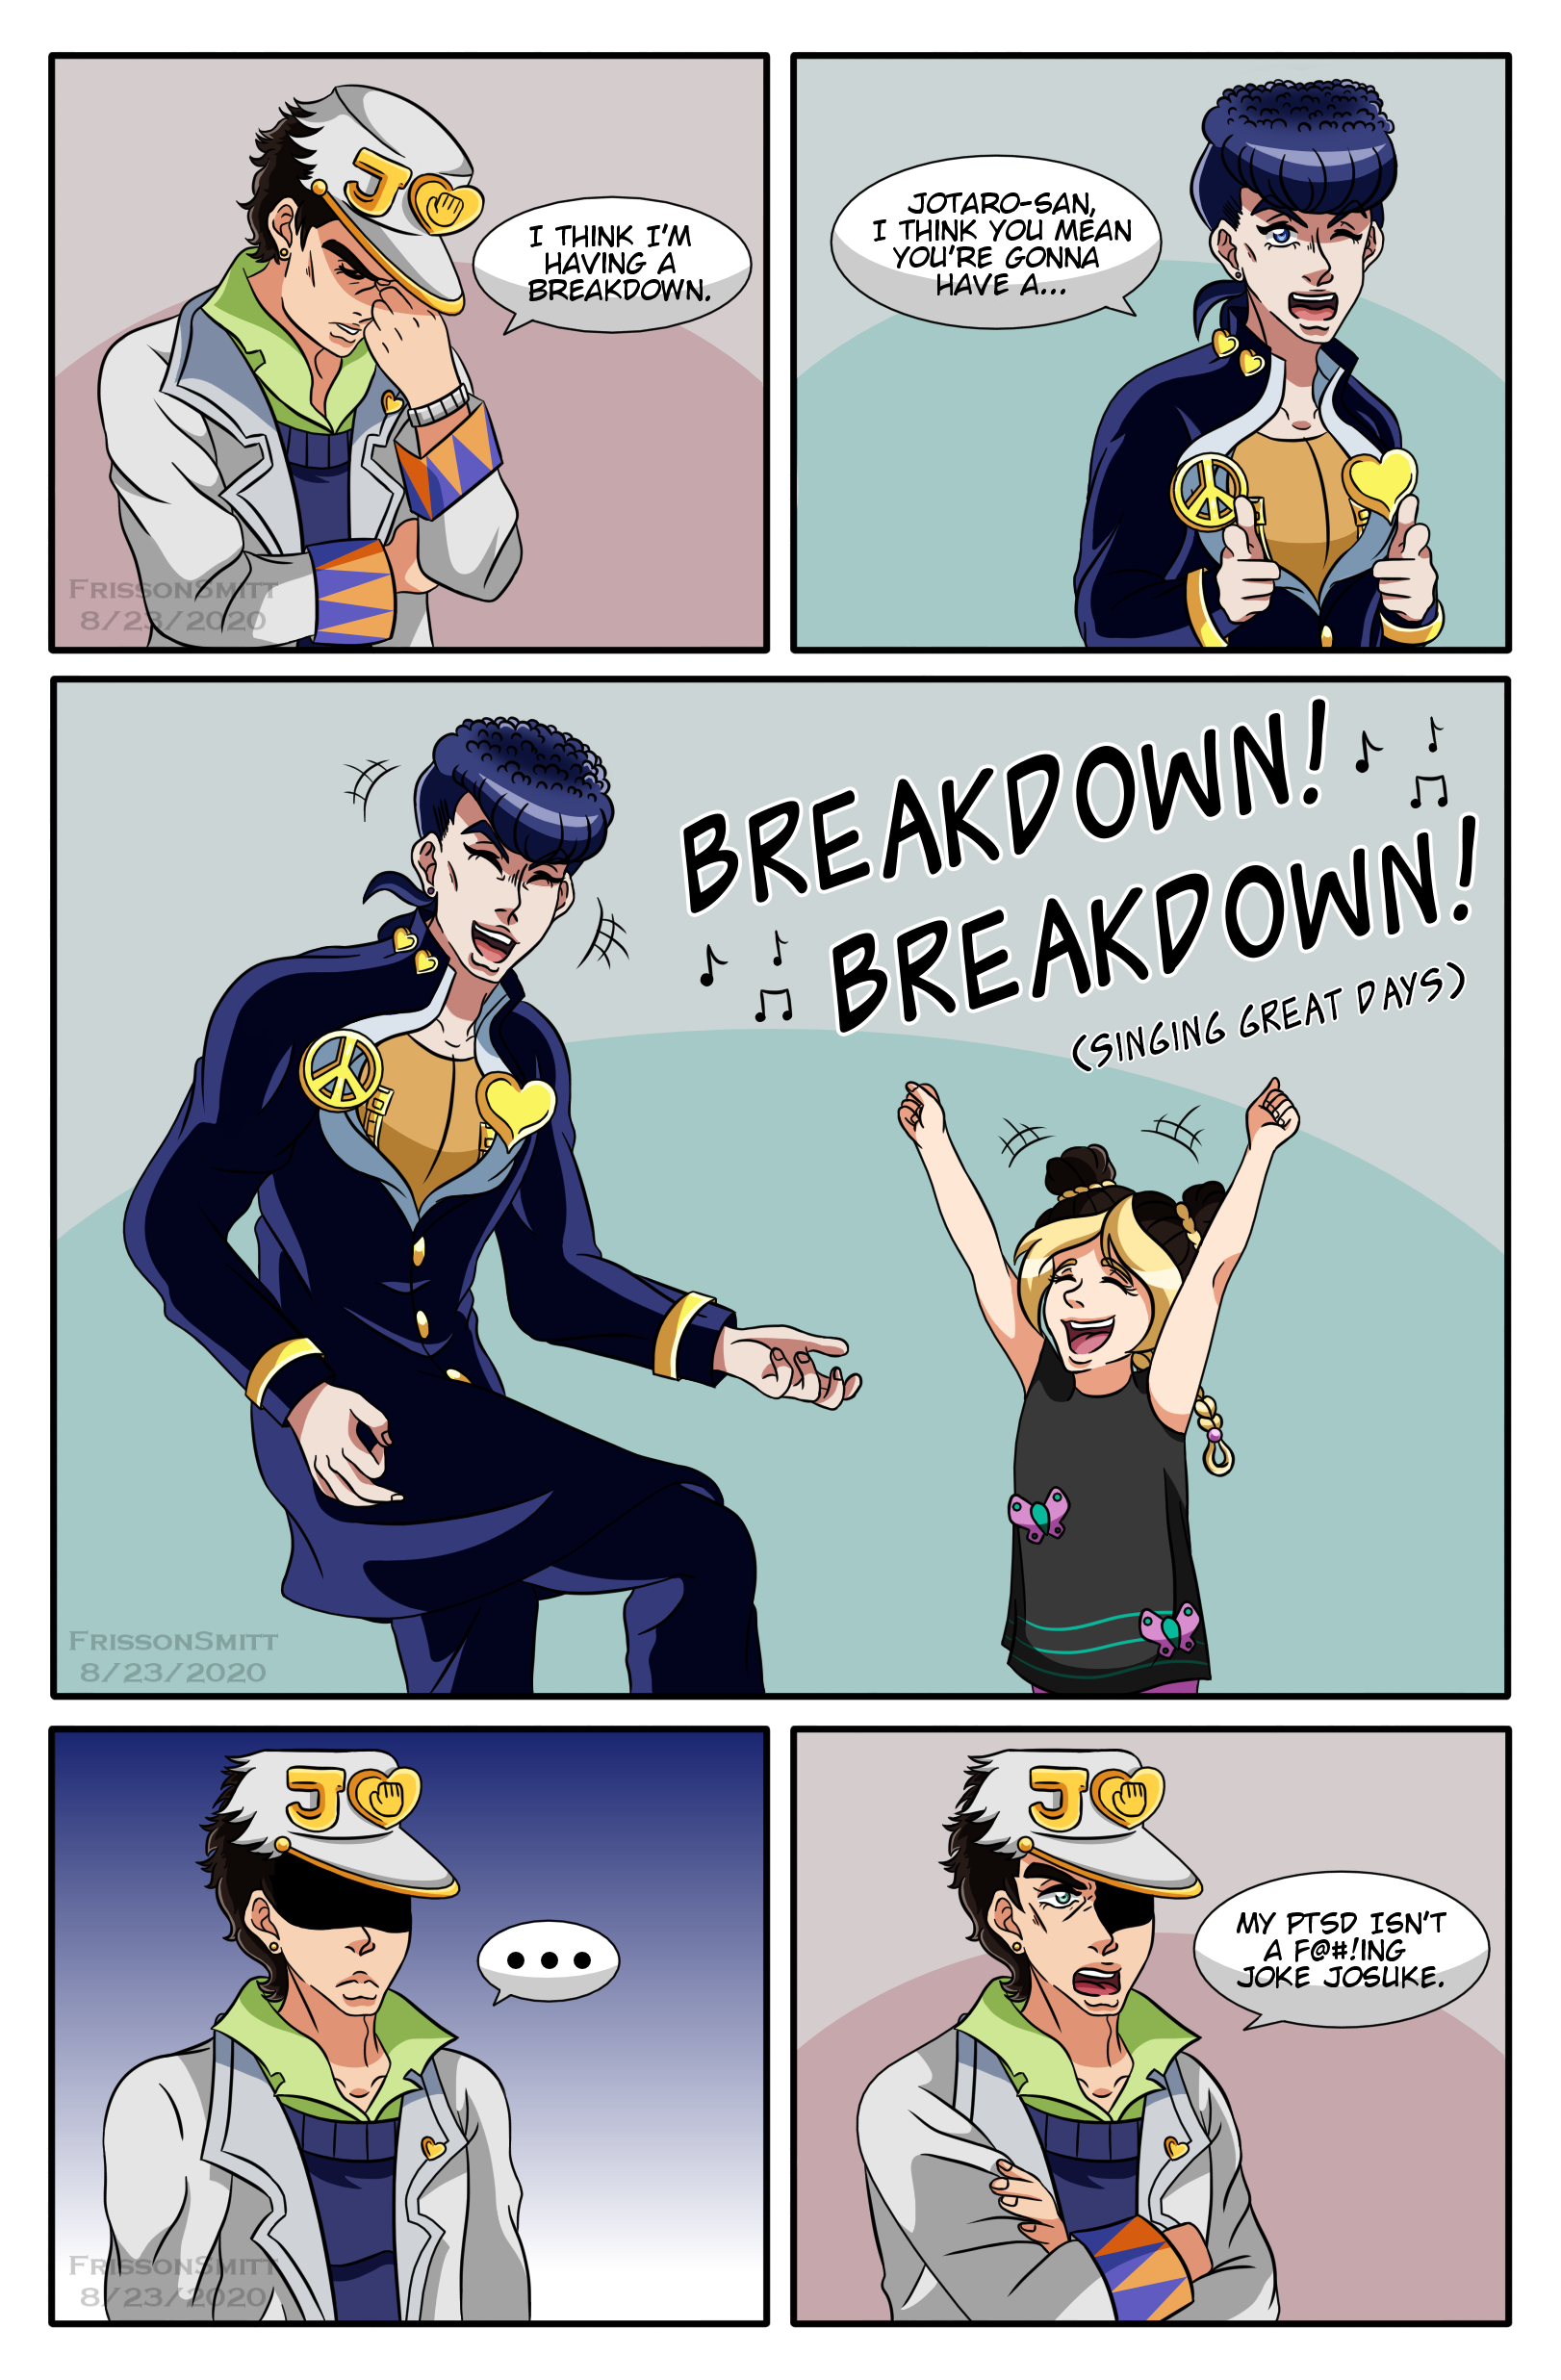 Jojo Comic - Jotaro's Breakdown by FrissonSmitt on DeviantArt